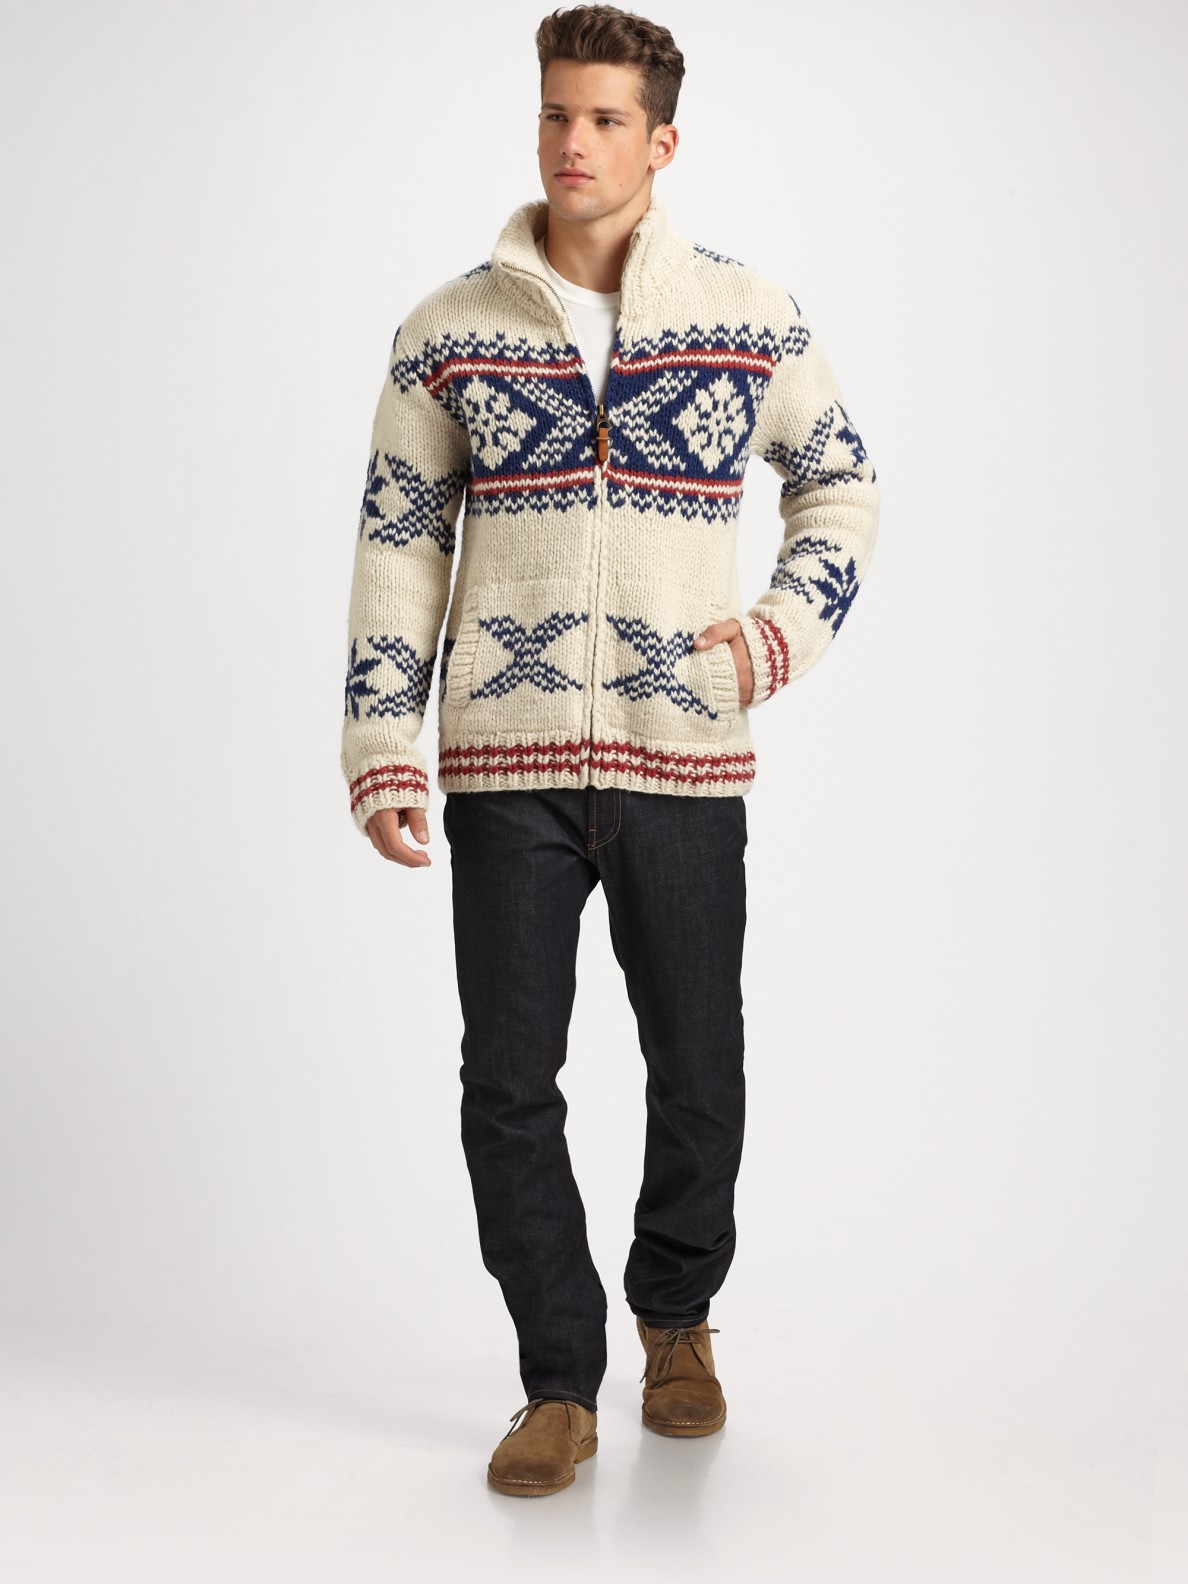 Lyst - Scotch & soda Hand-knit Wool Sweater in White for Men